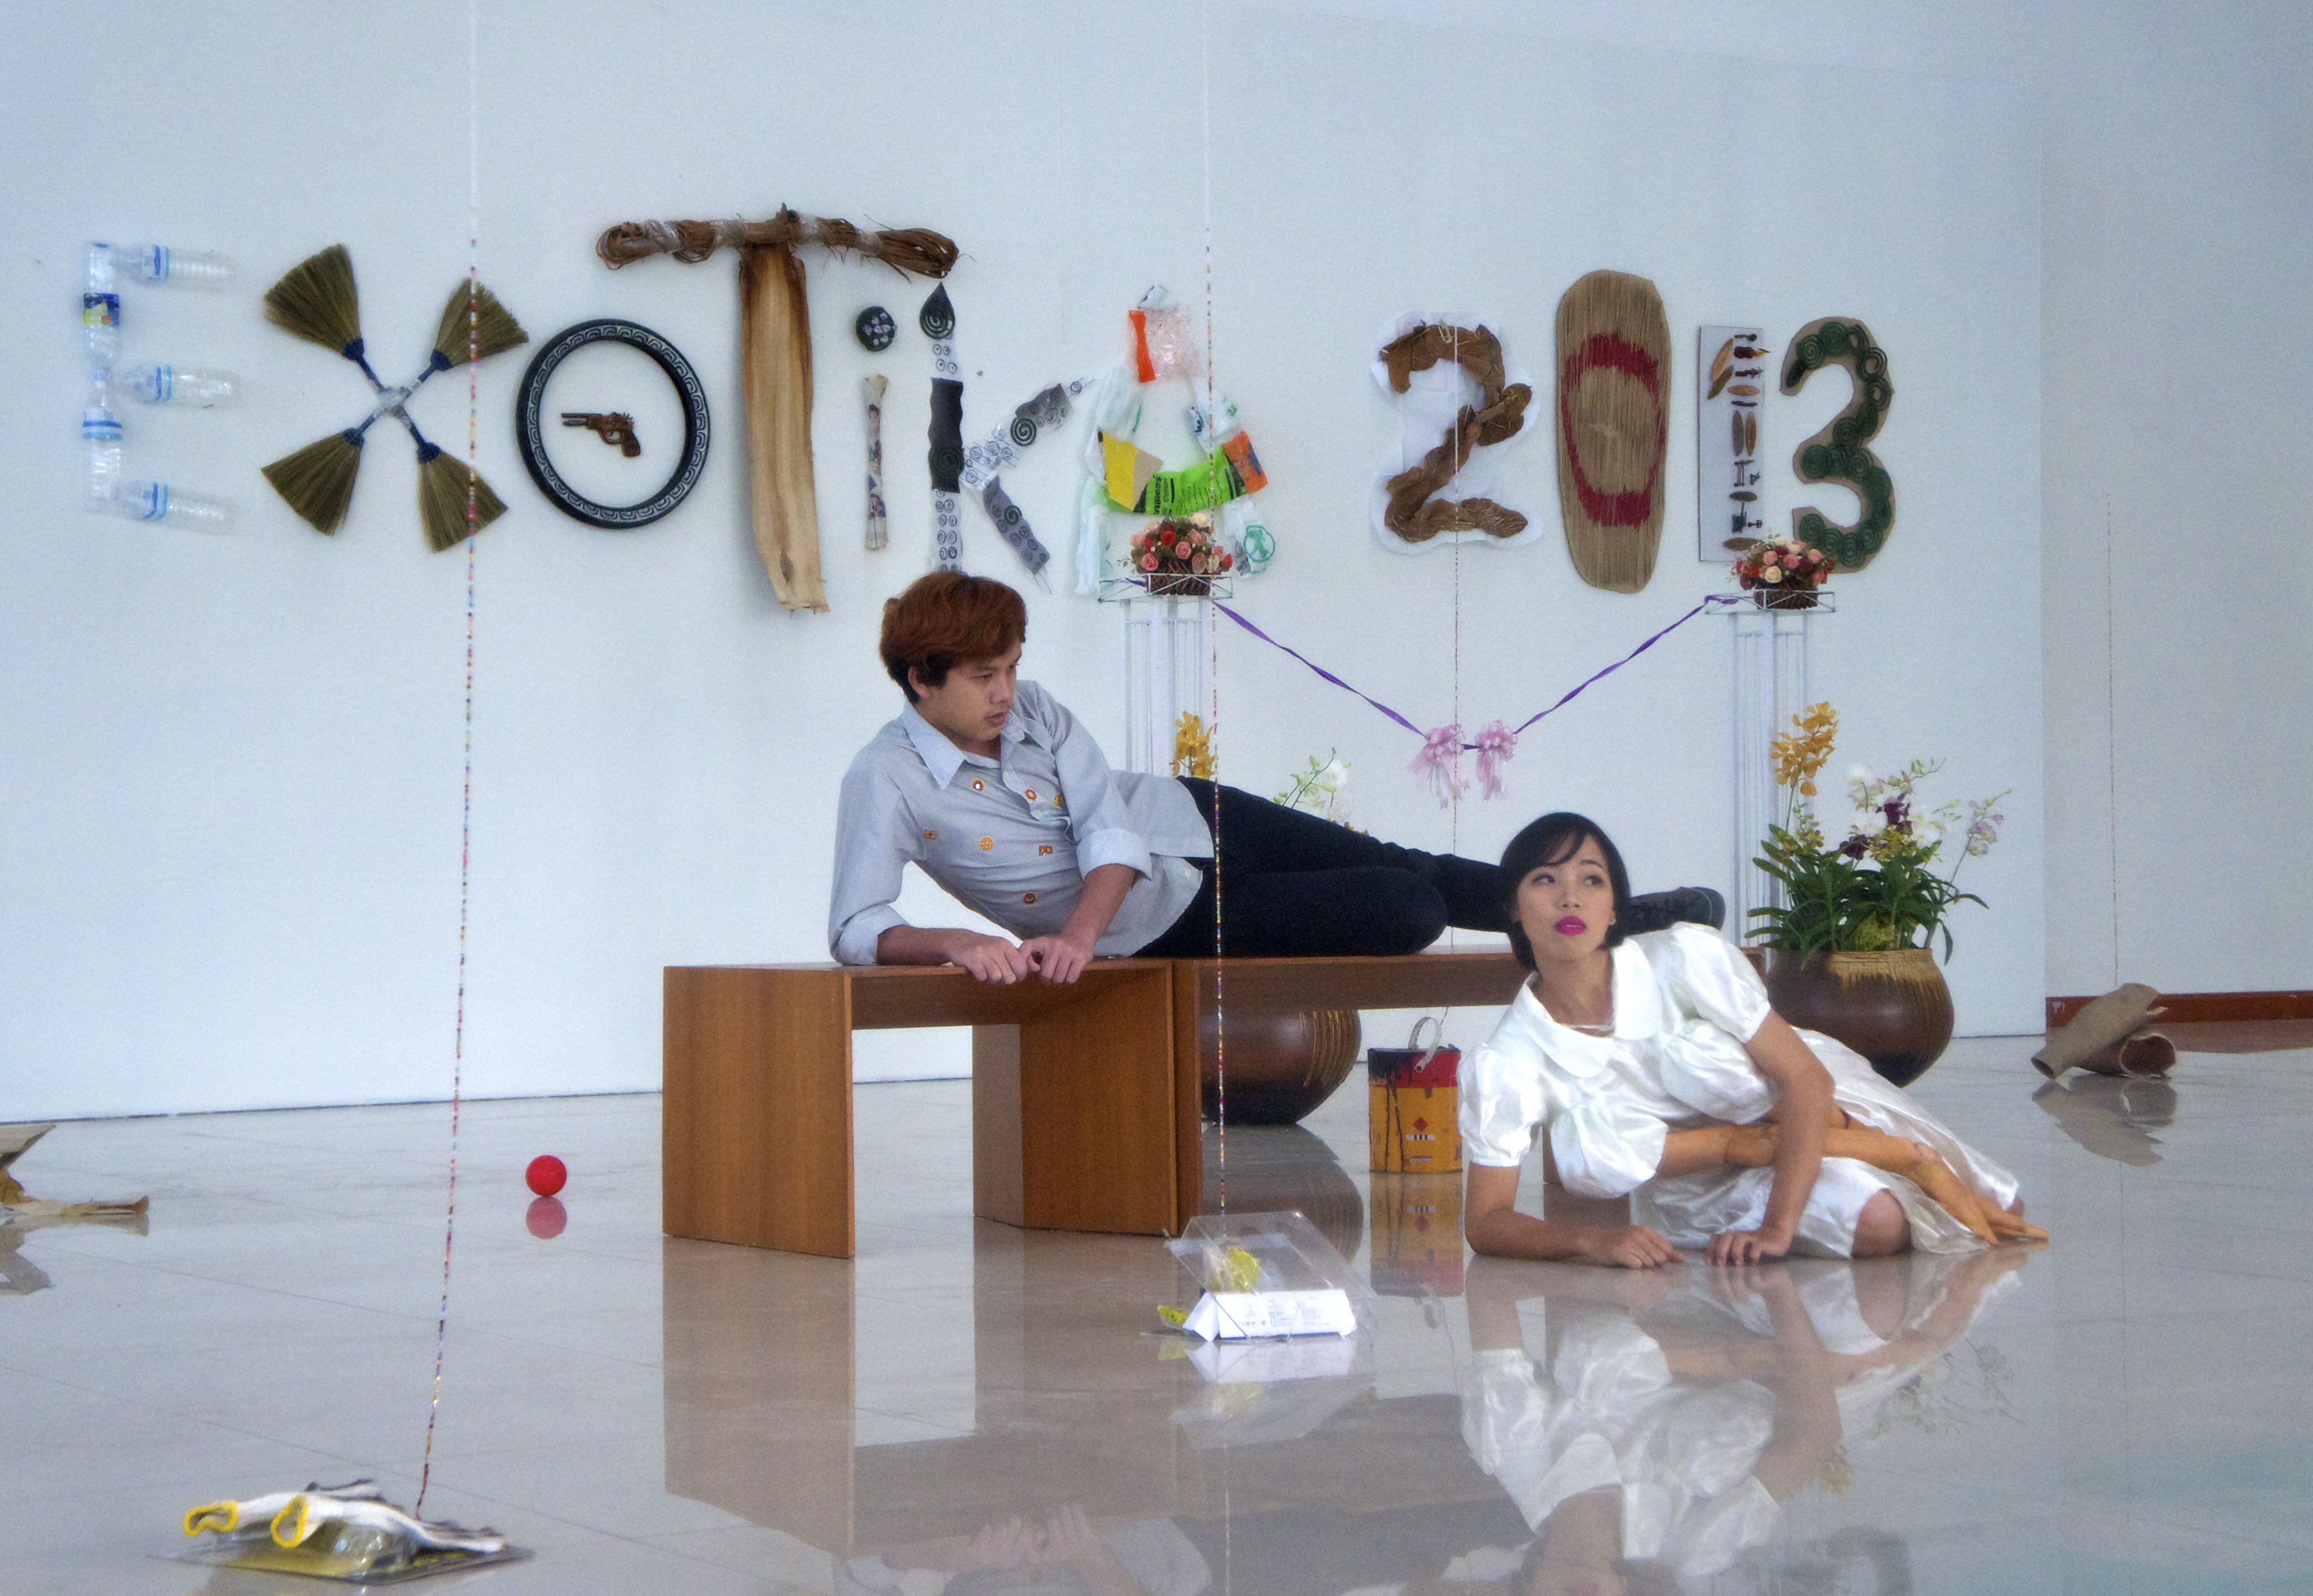 Exotika 2013 - Performance Opening event, Silapakorn Art Lab Bangkok, Thailand